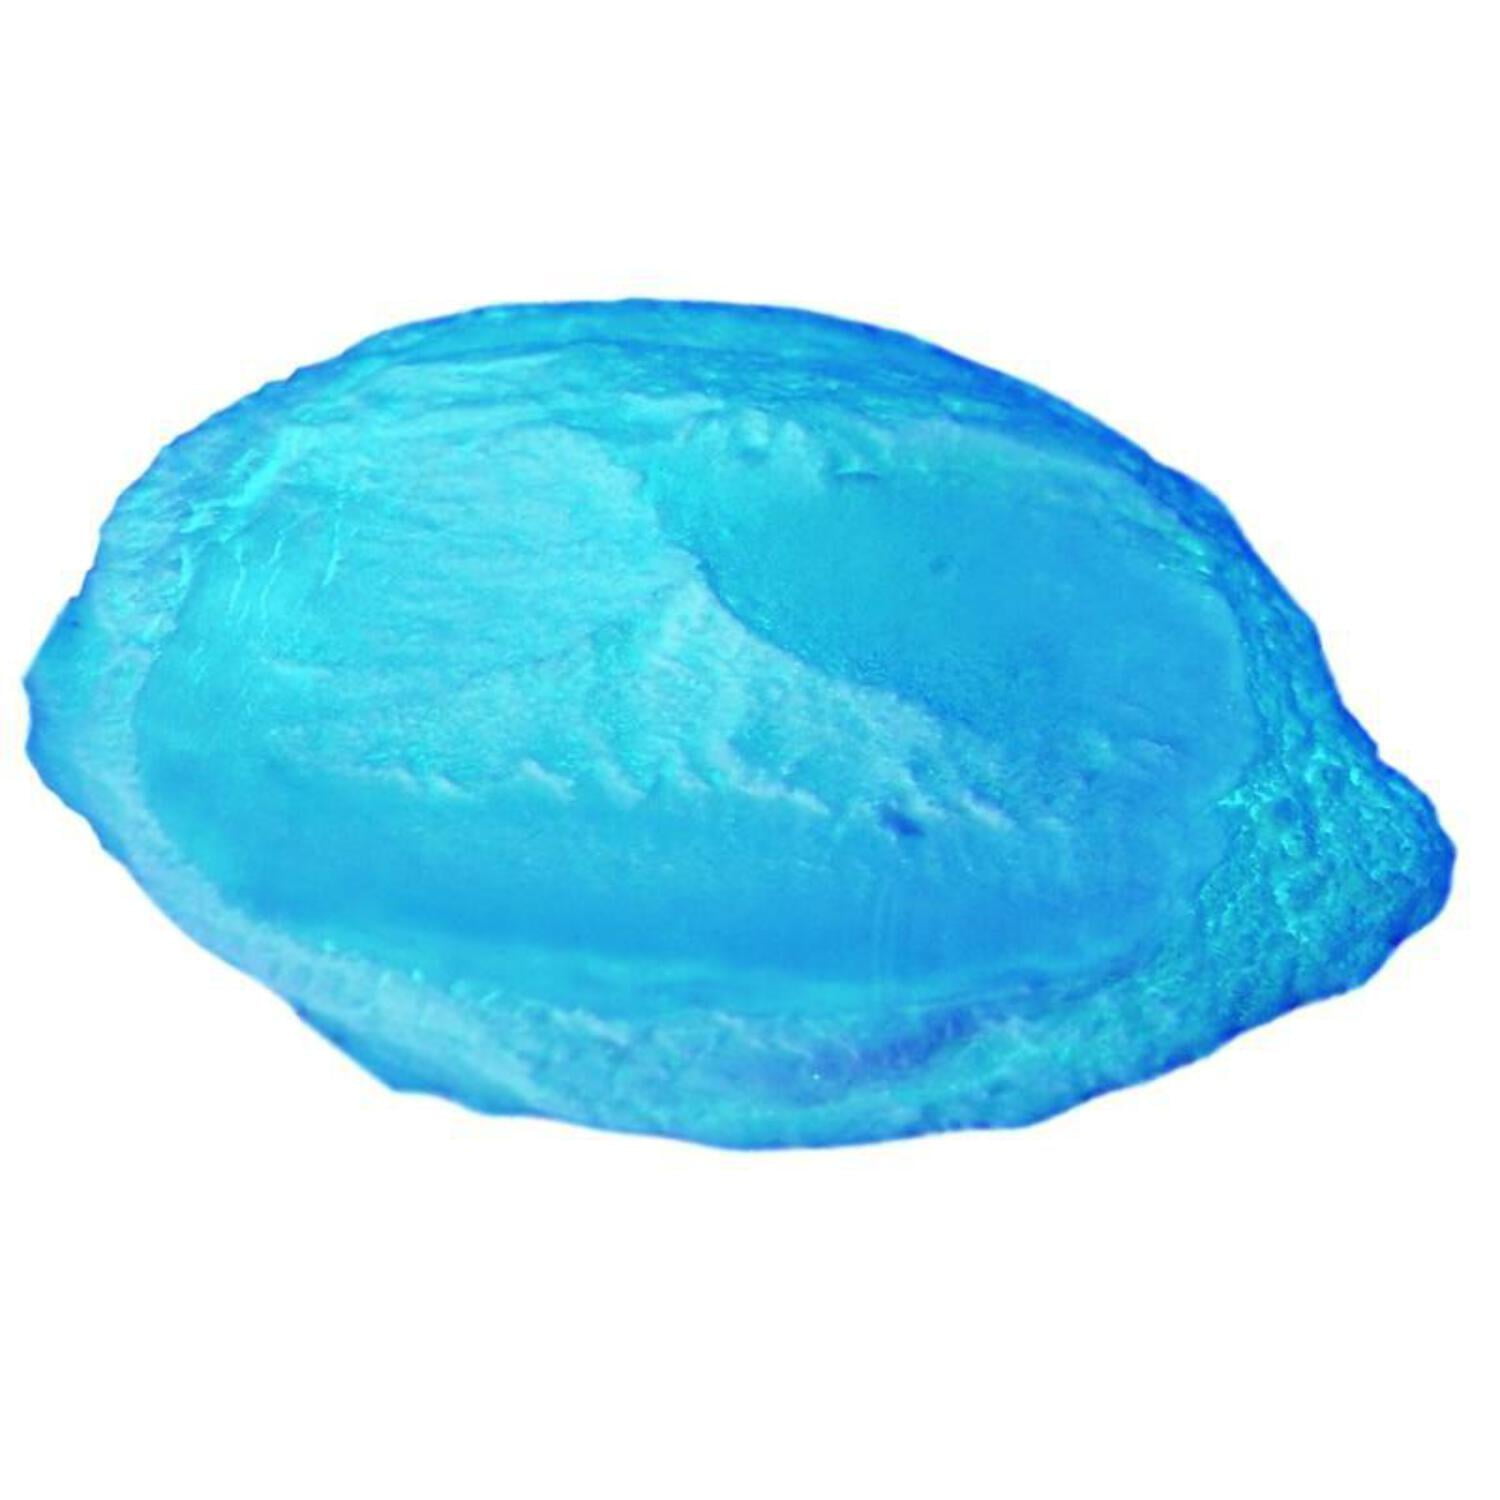  FIREDOTS Dark Pearl Blue Mica Powder - 100 Grams - Epoxy Resin  Color Pigment - Metallic Blue Mica Powder for Epoxy Resin - Blue Epoxy  Pigment Powder - Epoxy Color Pigment - Epoxy Resin Pigment